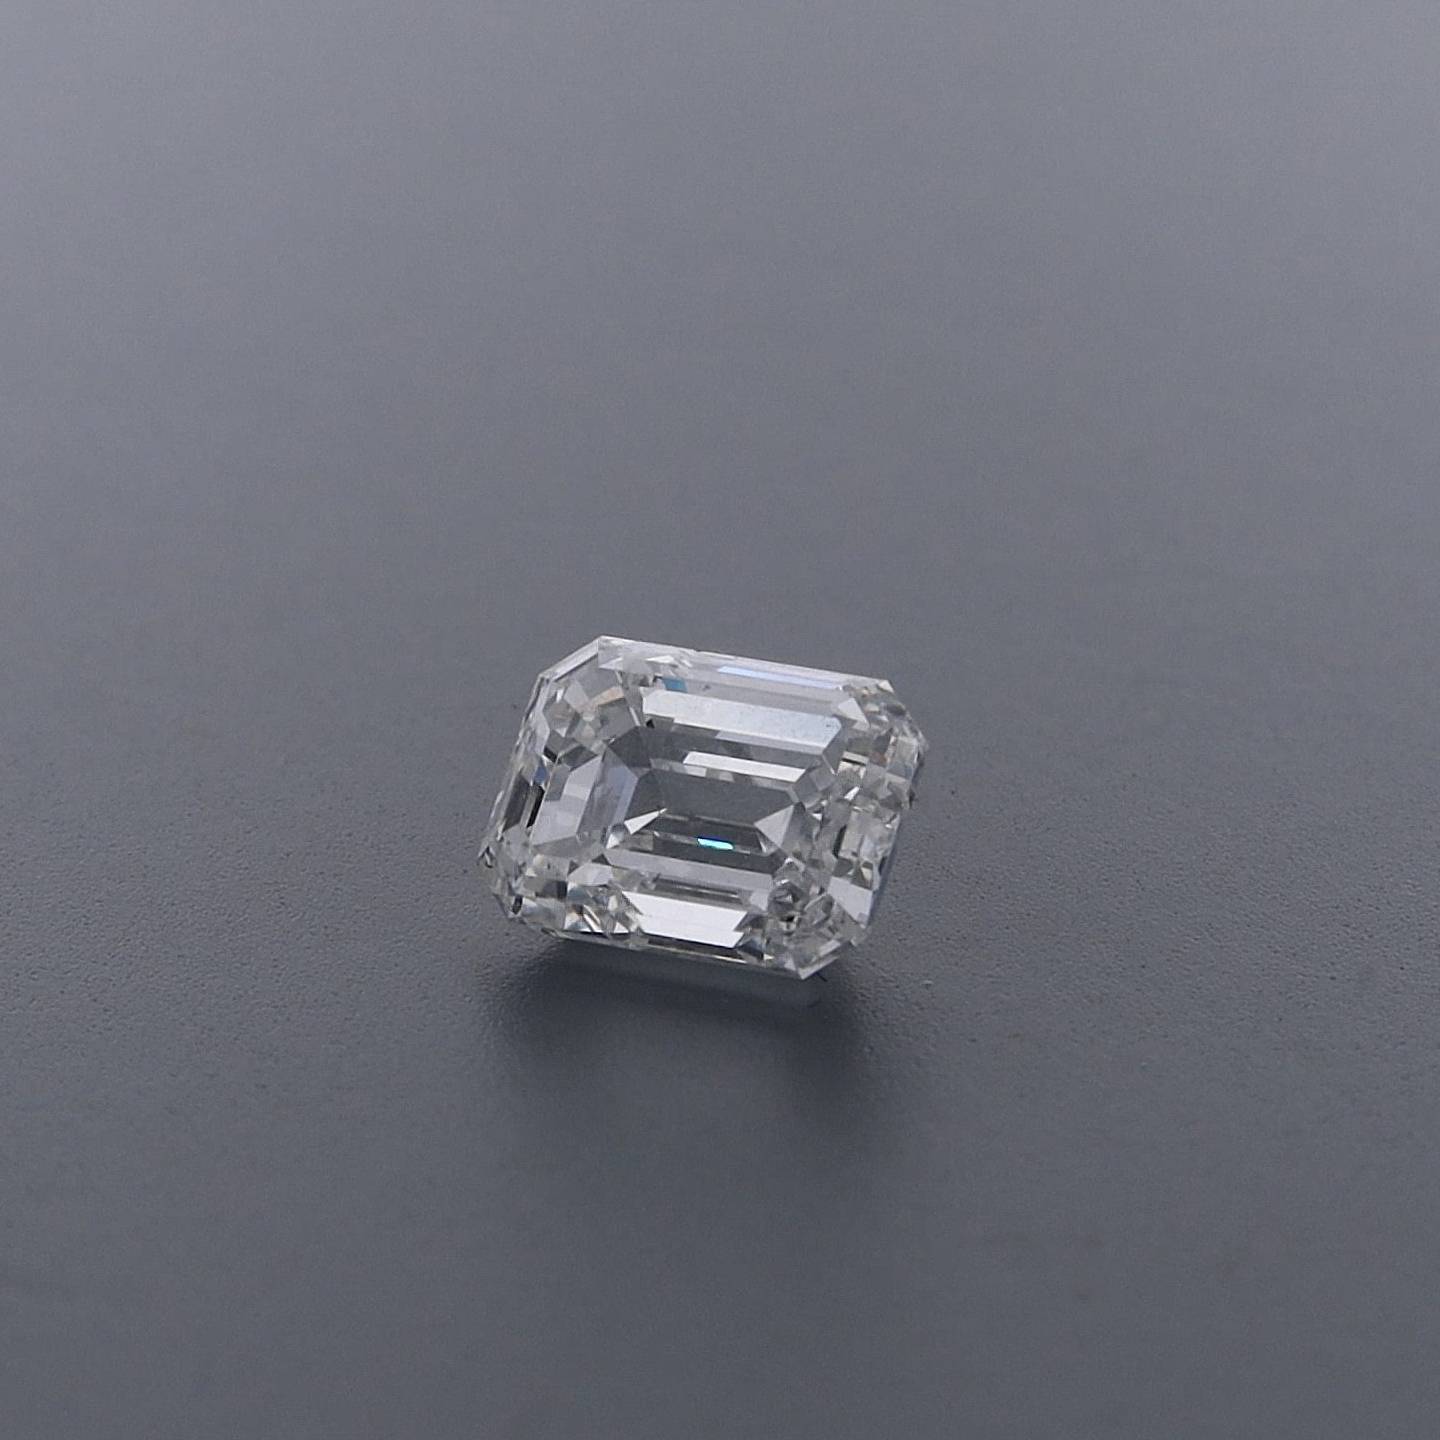 Emerald Cut 1.61ct FVS2 Diamond With GIA Cert